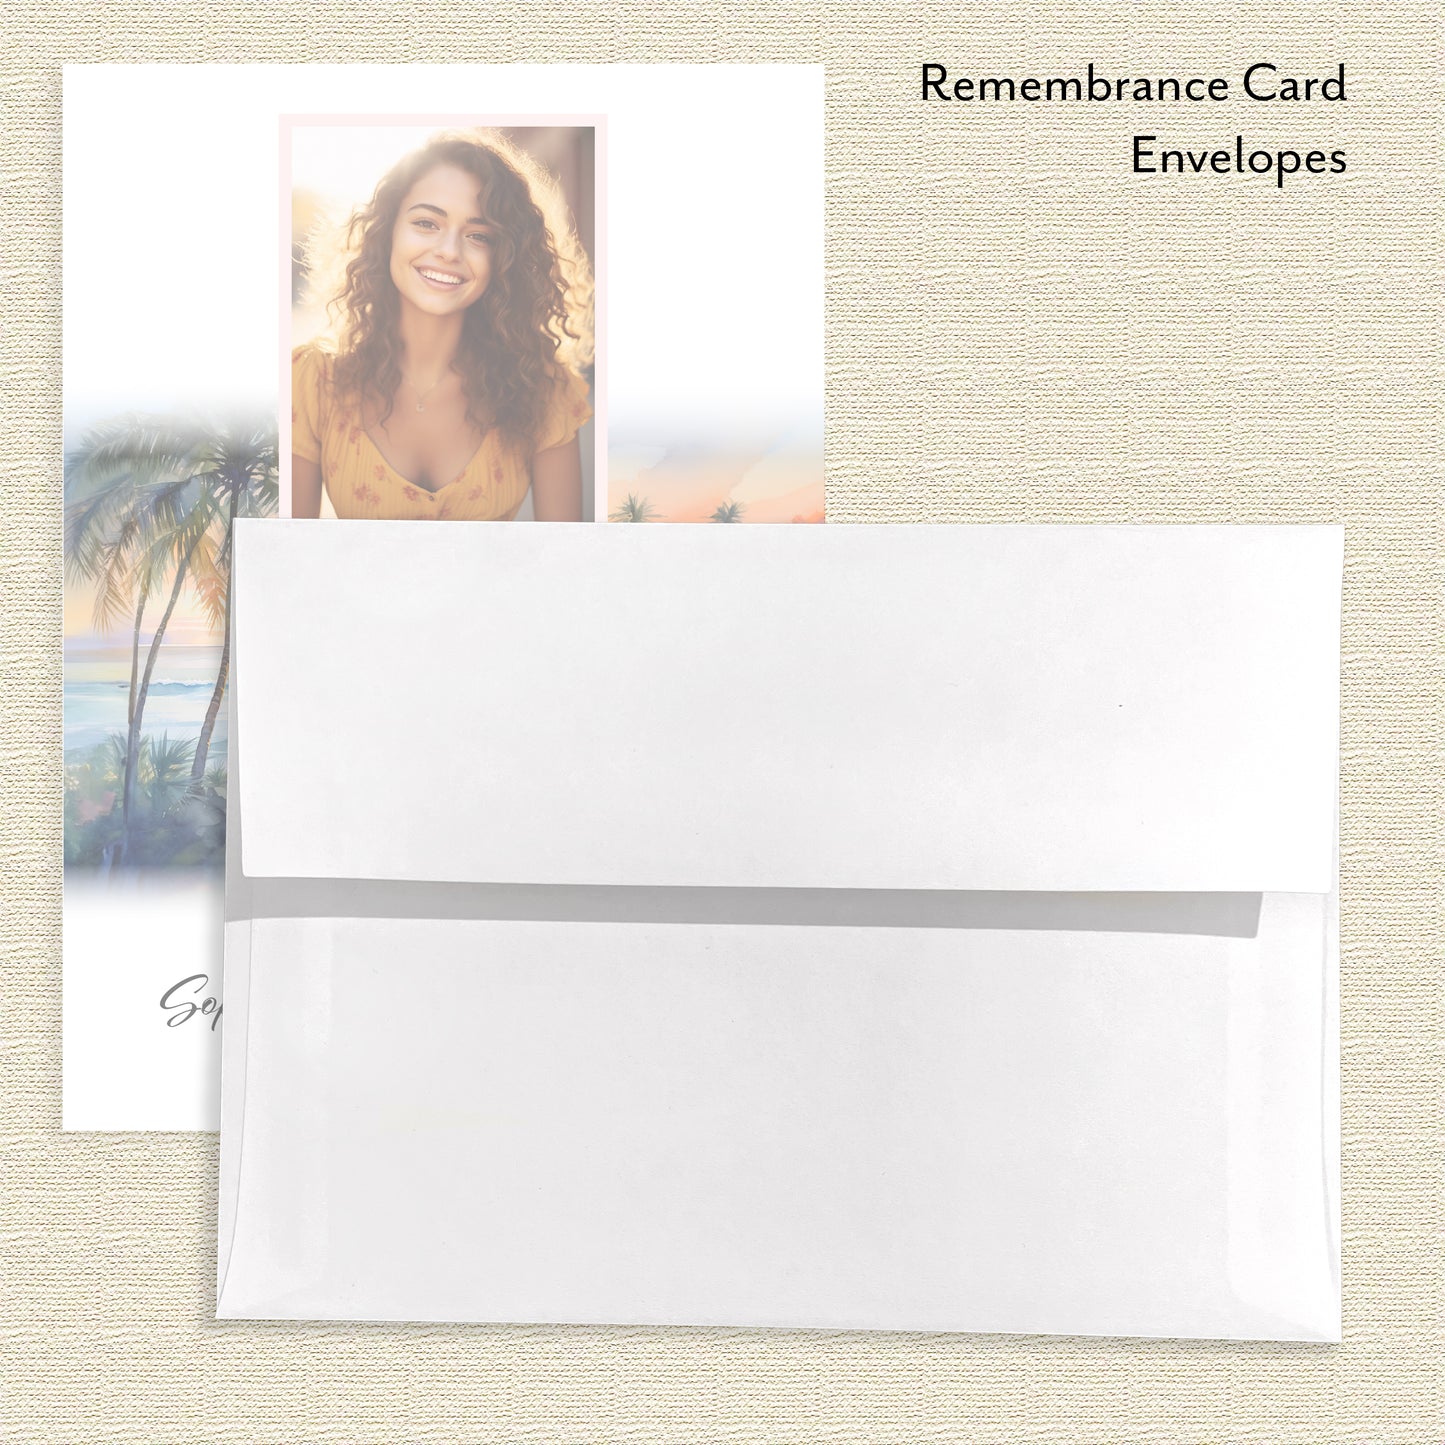 Remembrance Card Envelopes